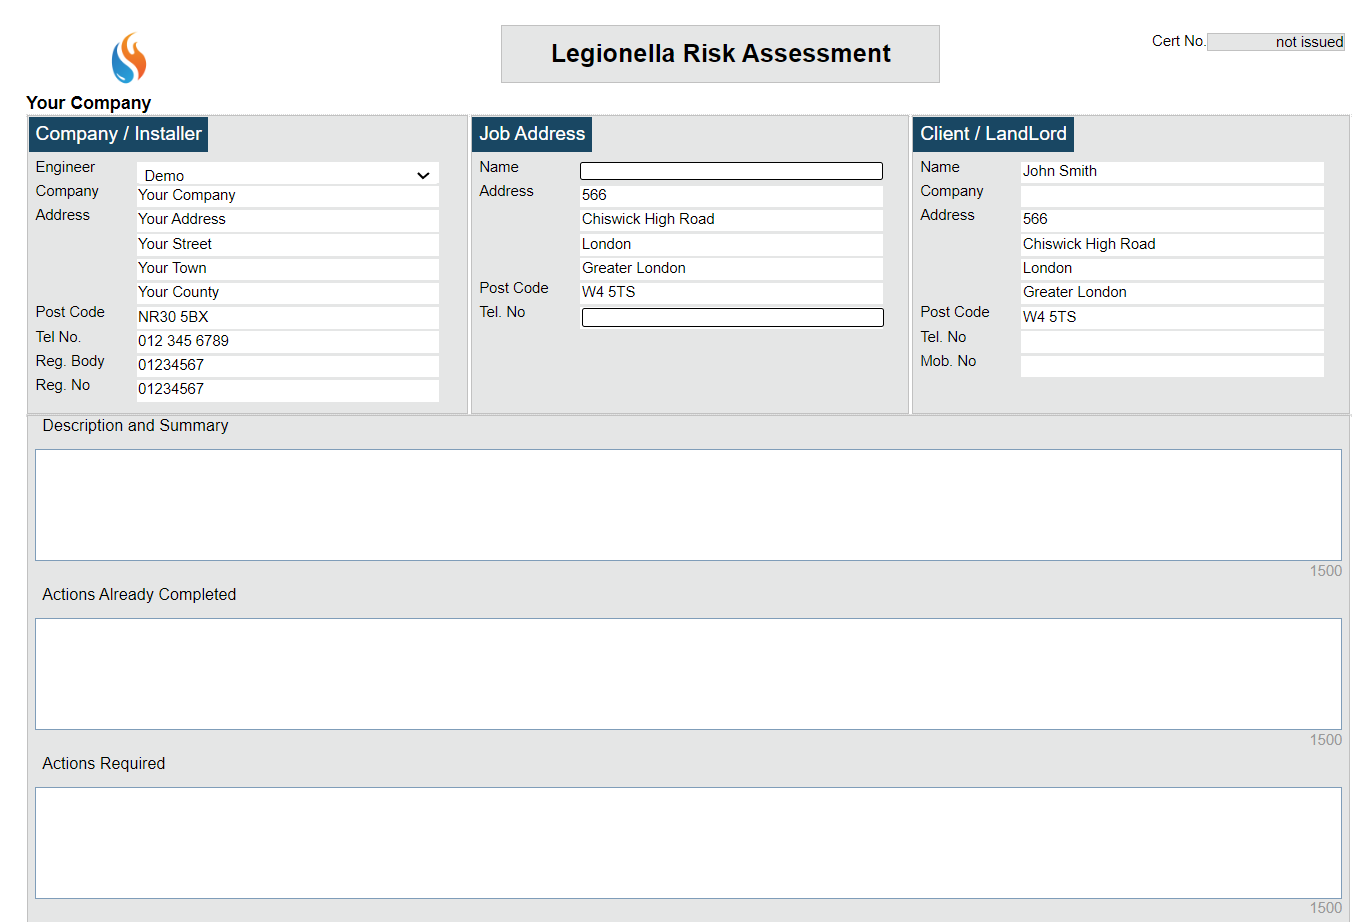 Legionella Risk Assessment App Record